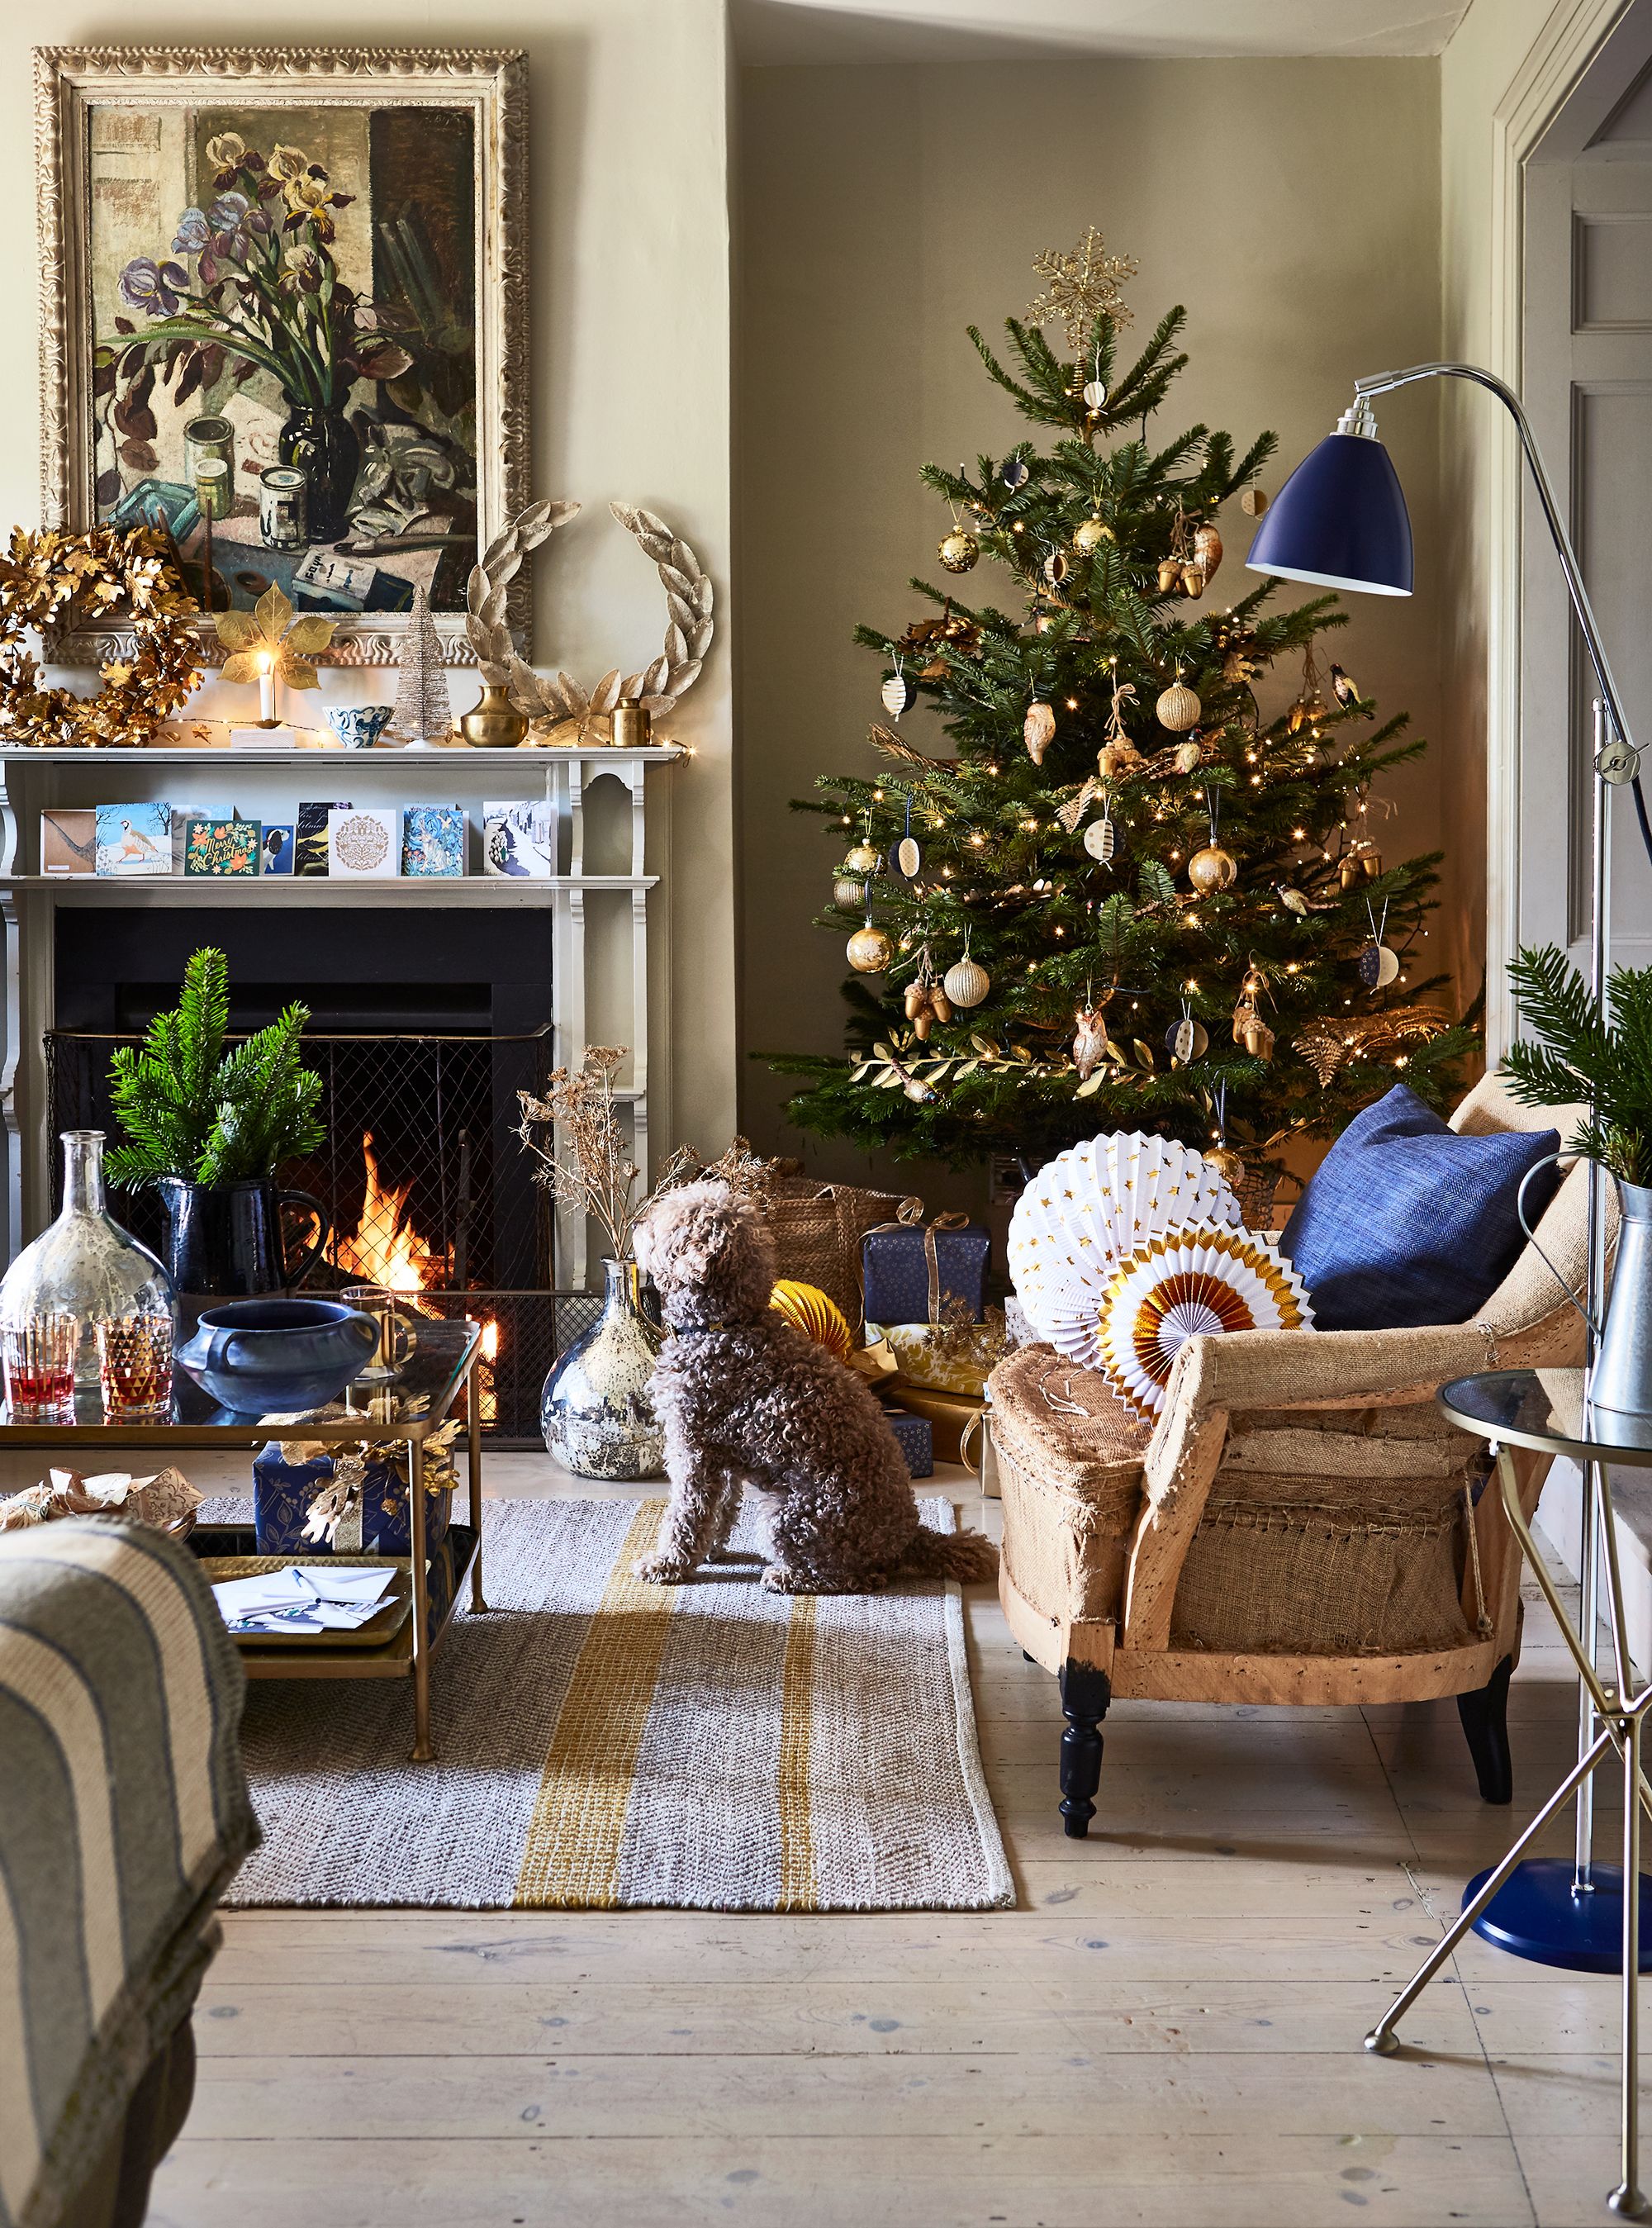 25 Christmas Mantel Decorating Ideas - Holiday Fireplace Style